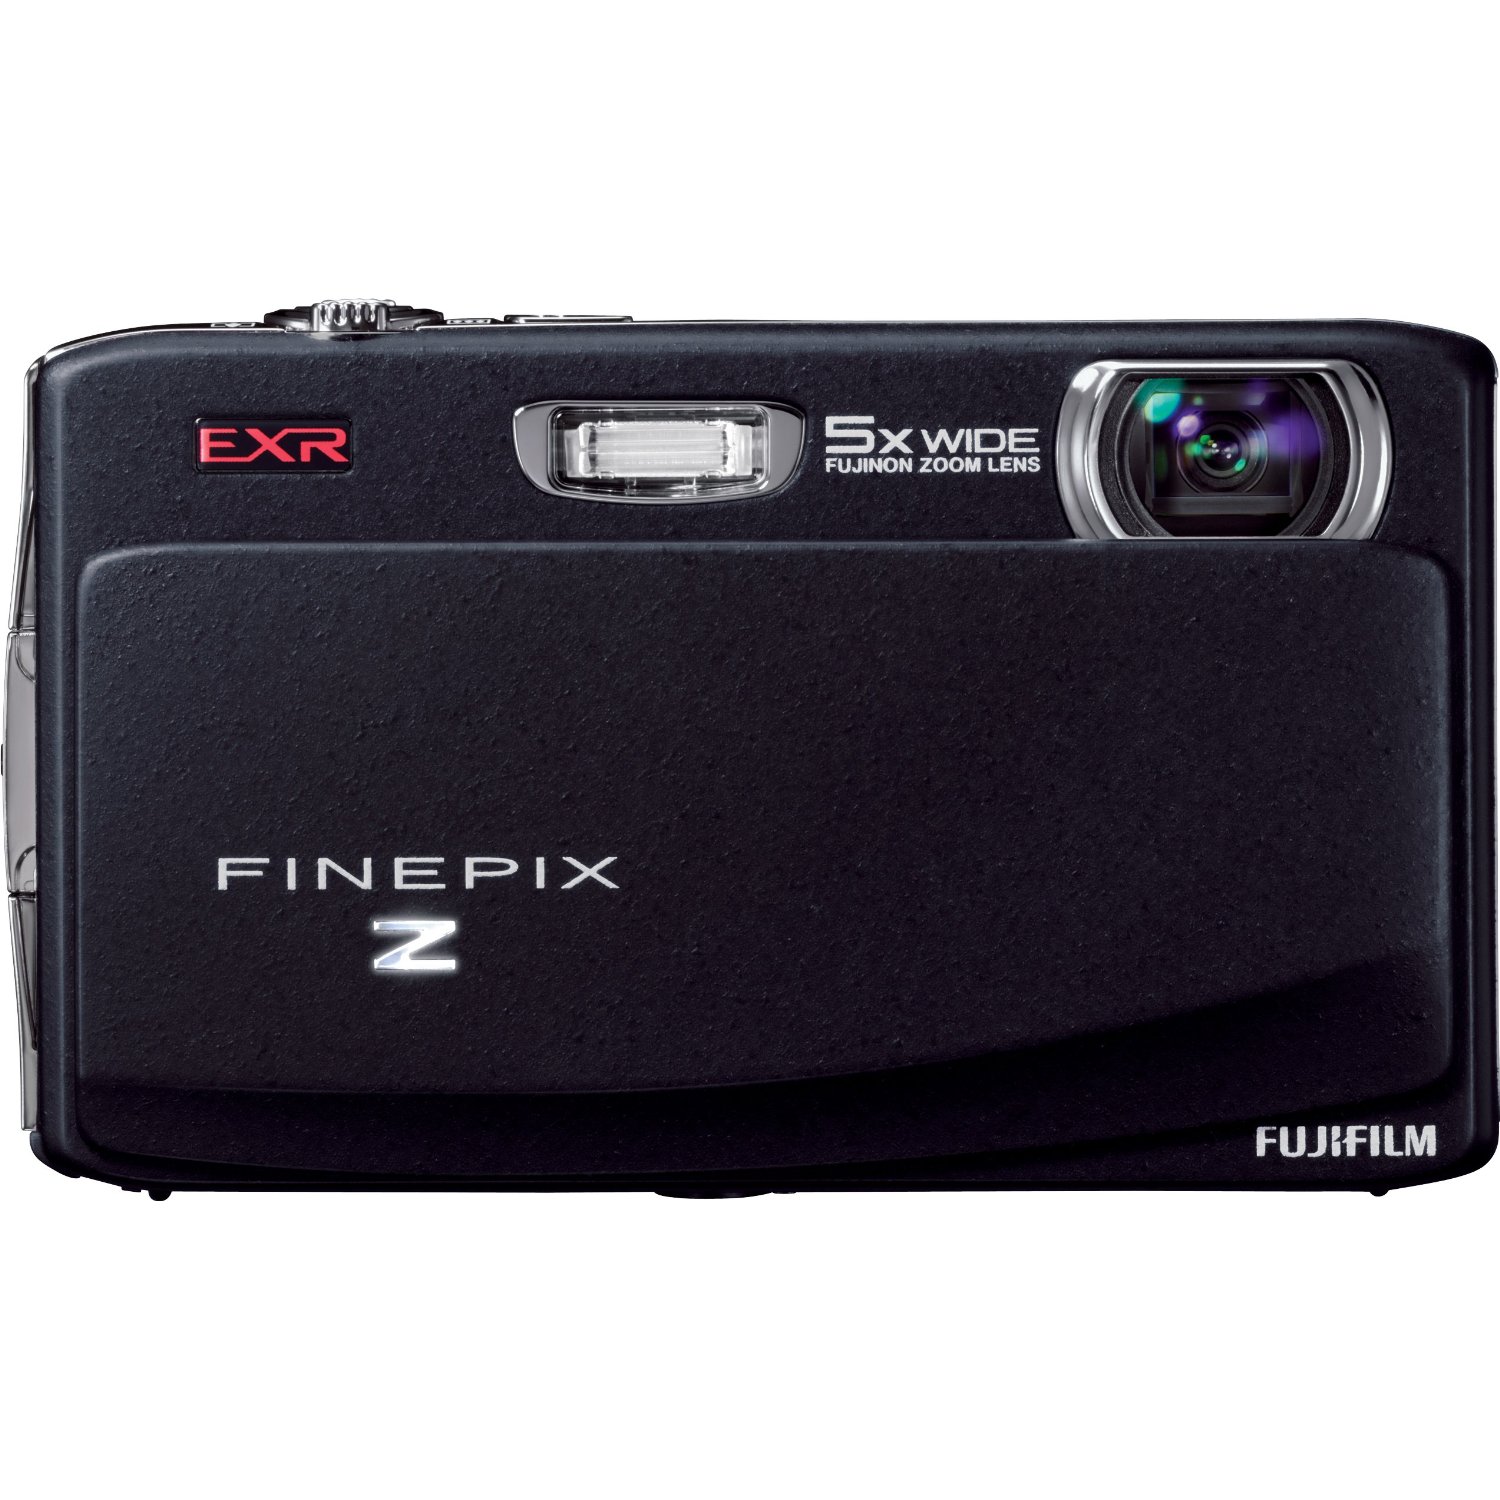 http://thetechjournal.com/wp-content/uploads/images/1109/1316760746-fujifilm-finepix-z900exr-16-mp-touchscreen-digital-camera-2.jpg